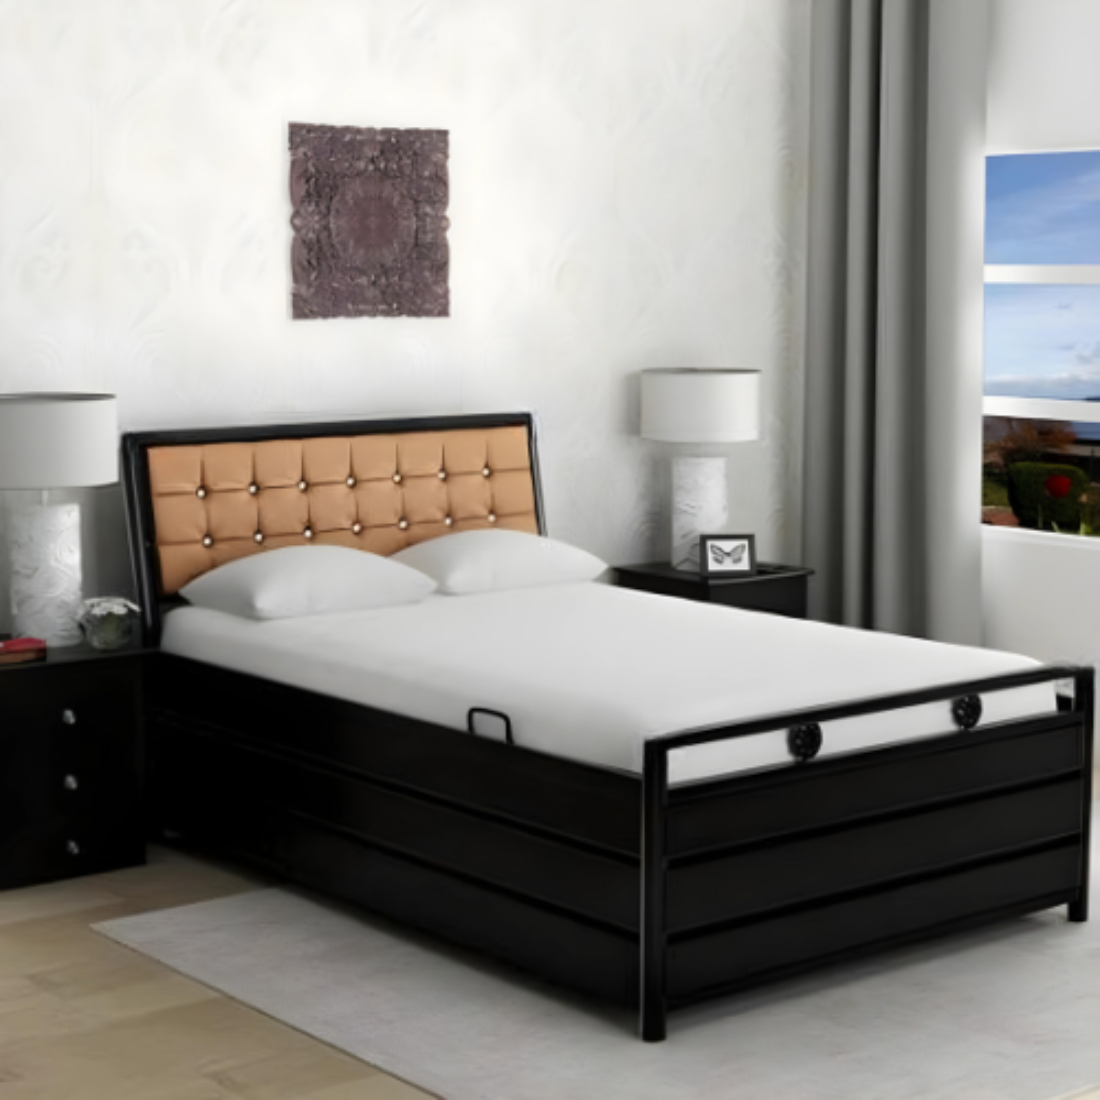 Heath Hydraulic Storage Single Metal Bed with Golden Cushion Headrest (Color - Black)